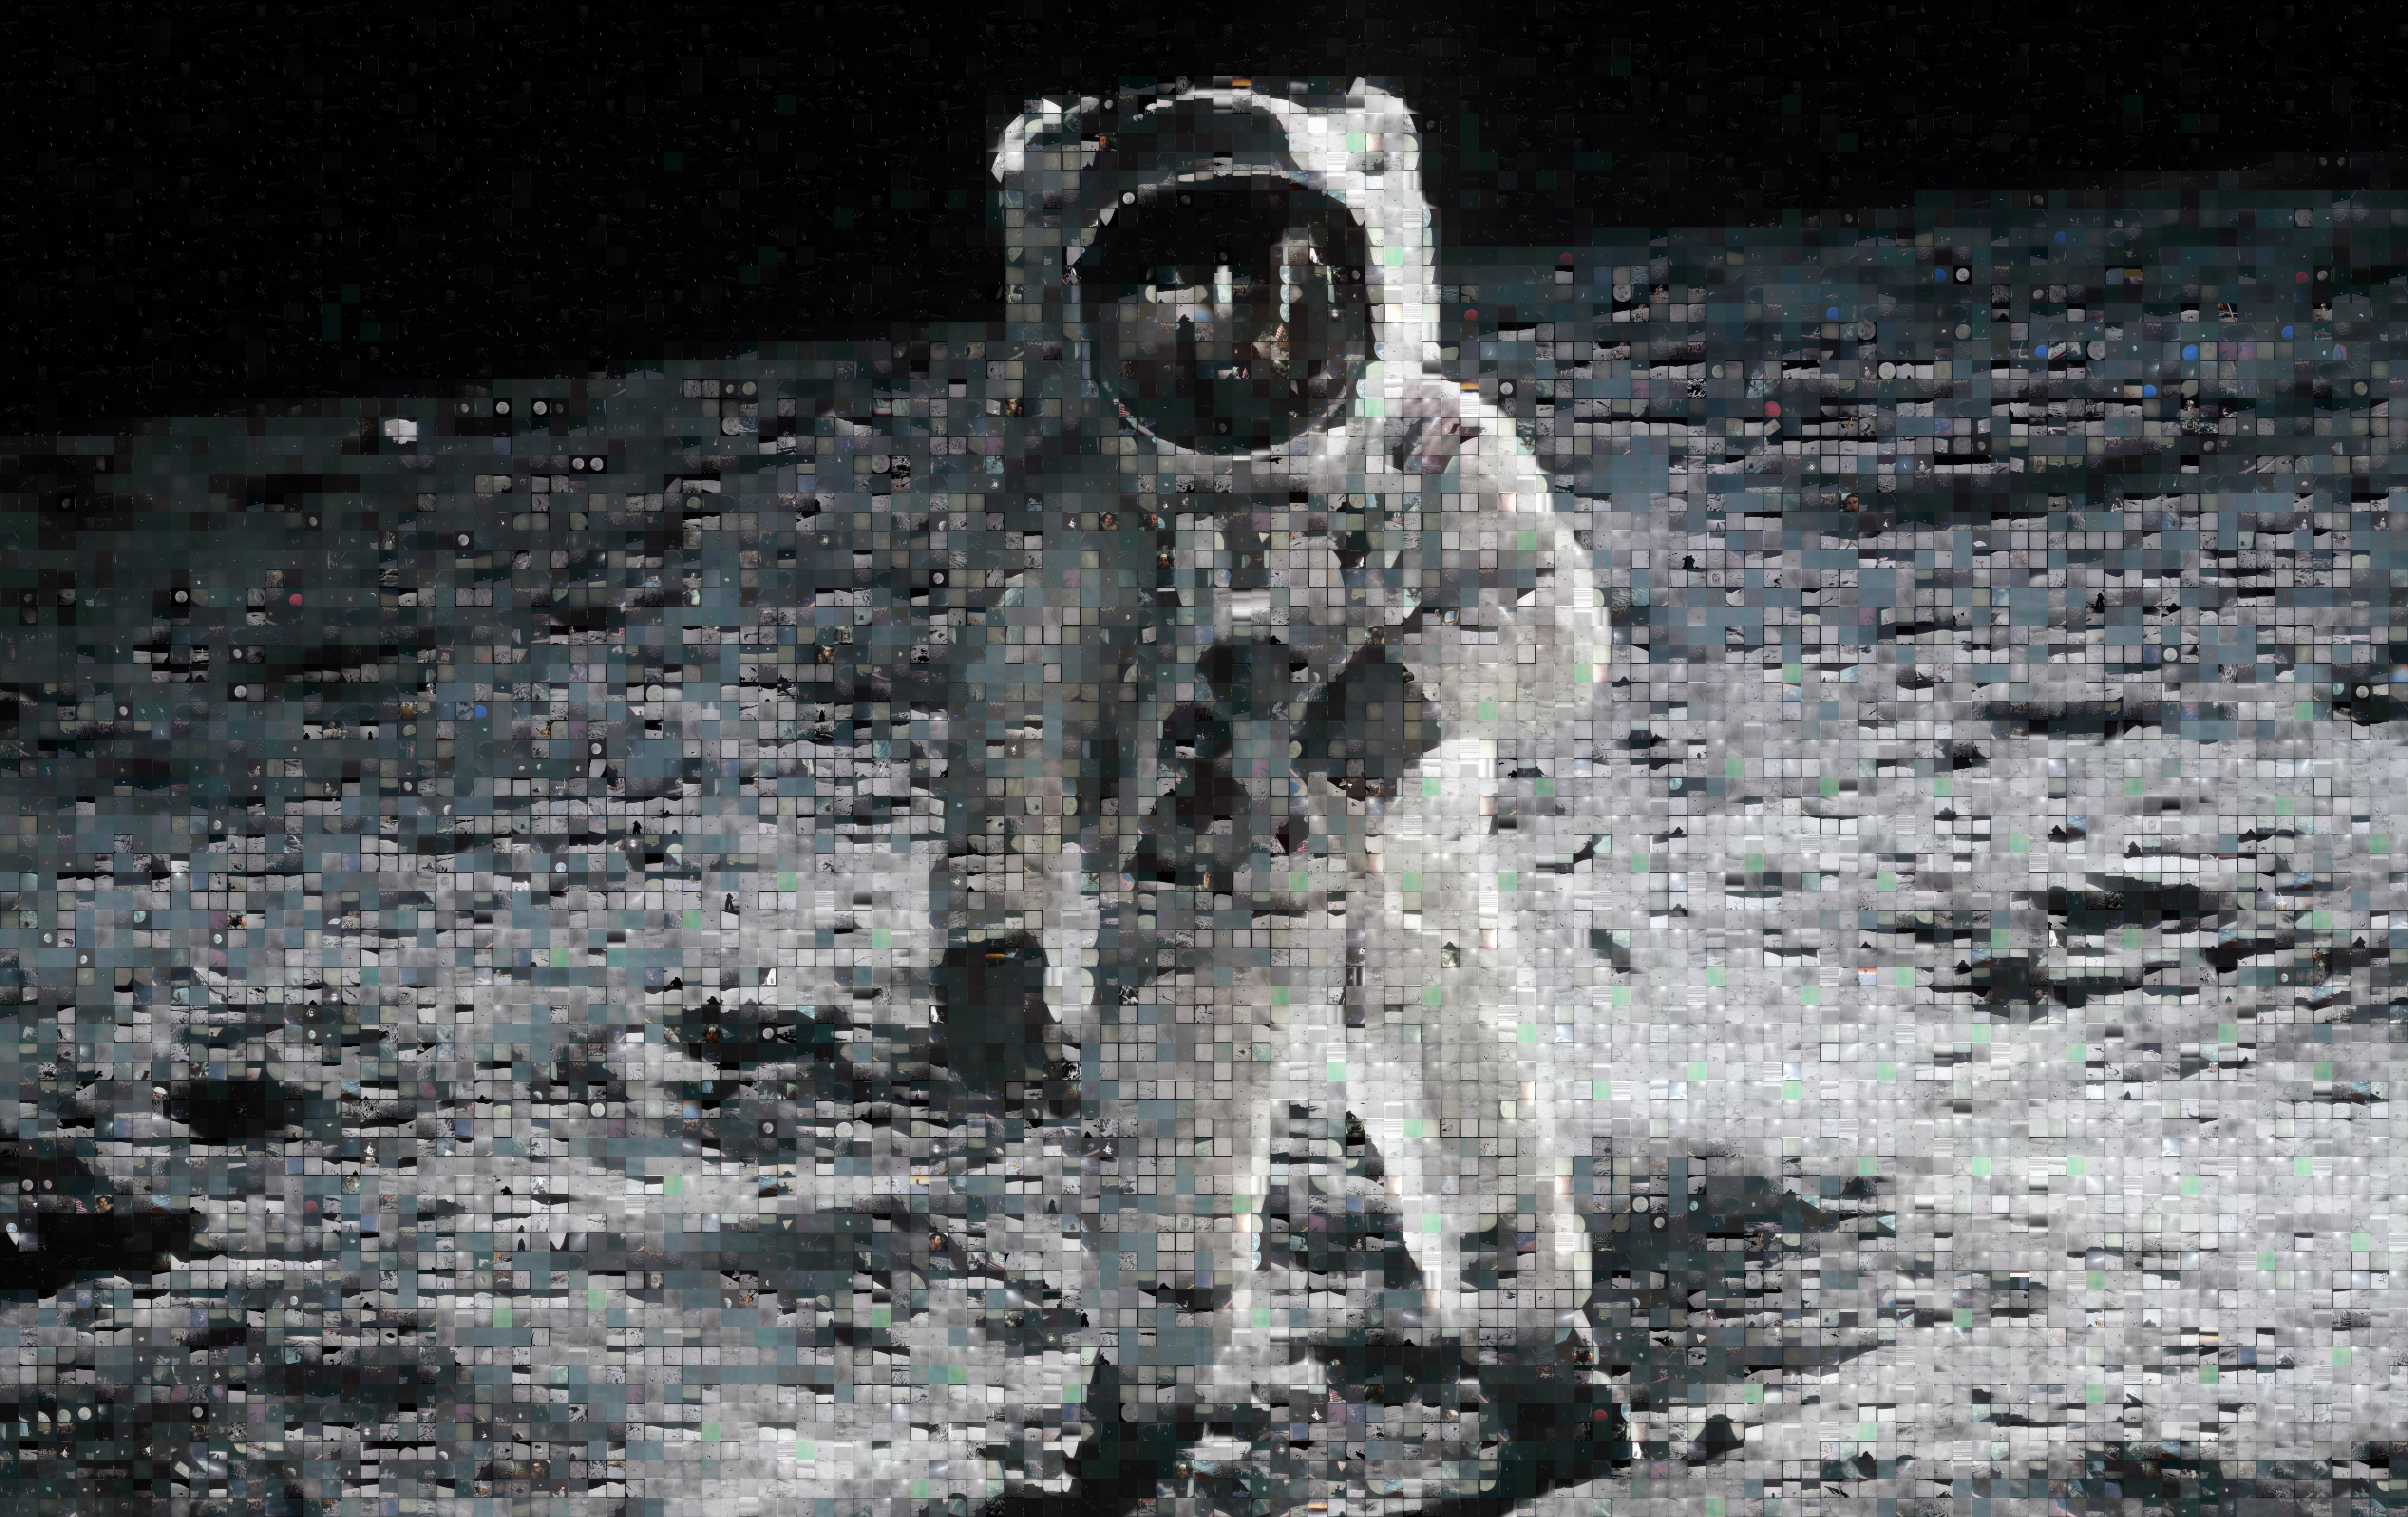 Buzz-Aldrin-on-the-Moon Mosaic03